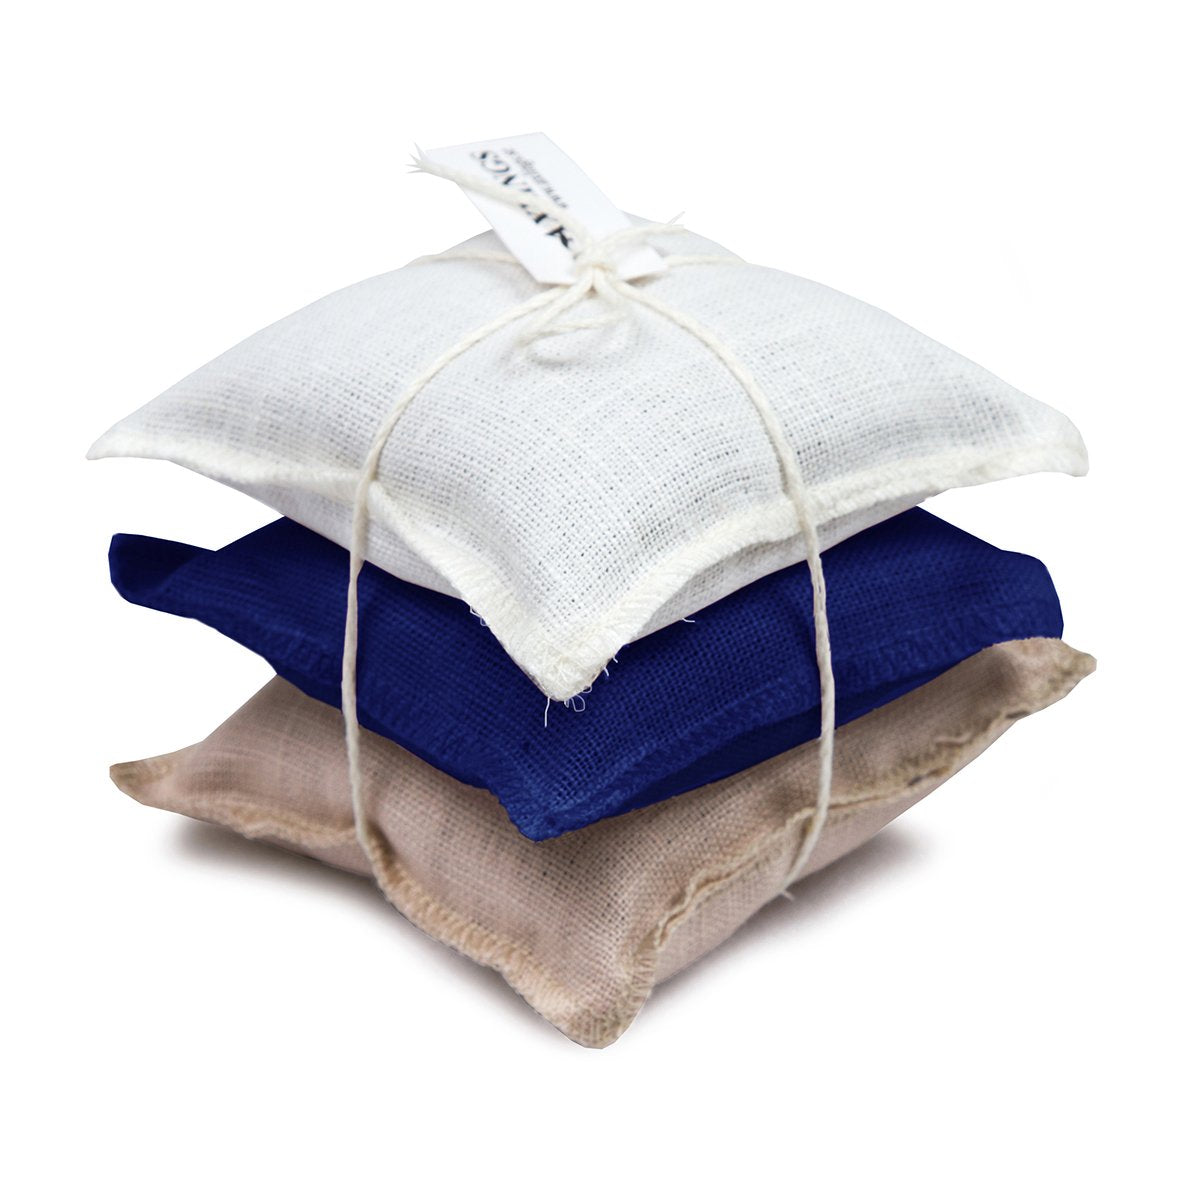 Linen Sachet Pillows Lavender Scent Marine, Natural & White Eleish Van Breems Home